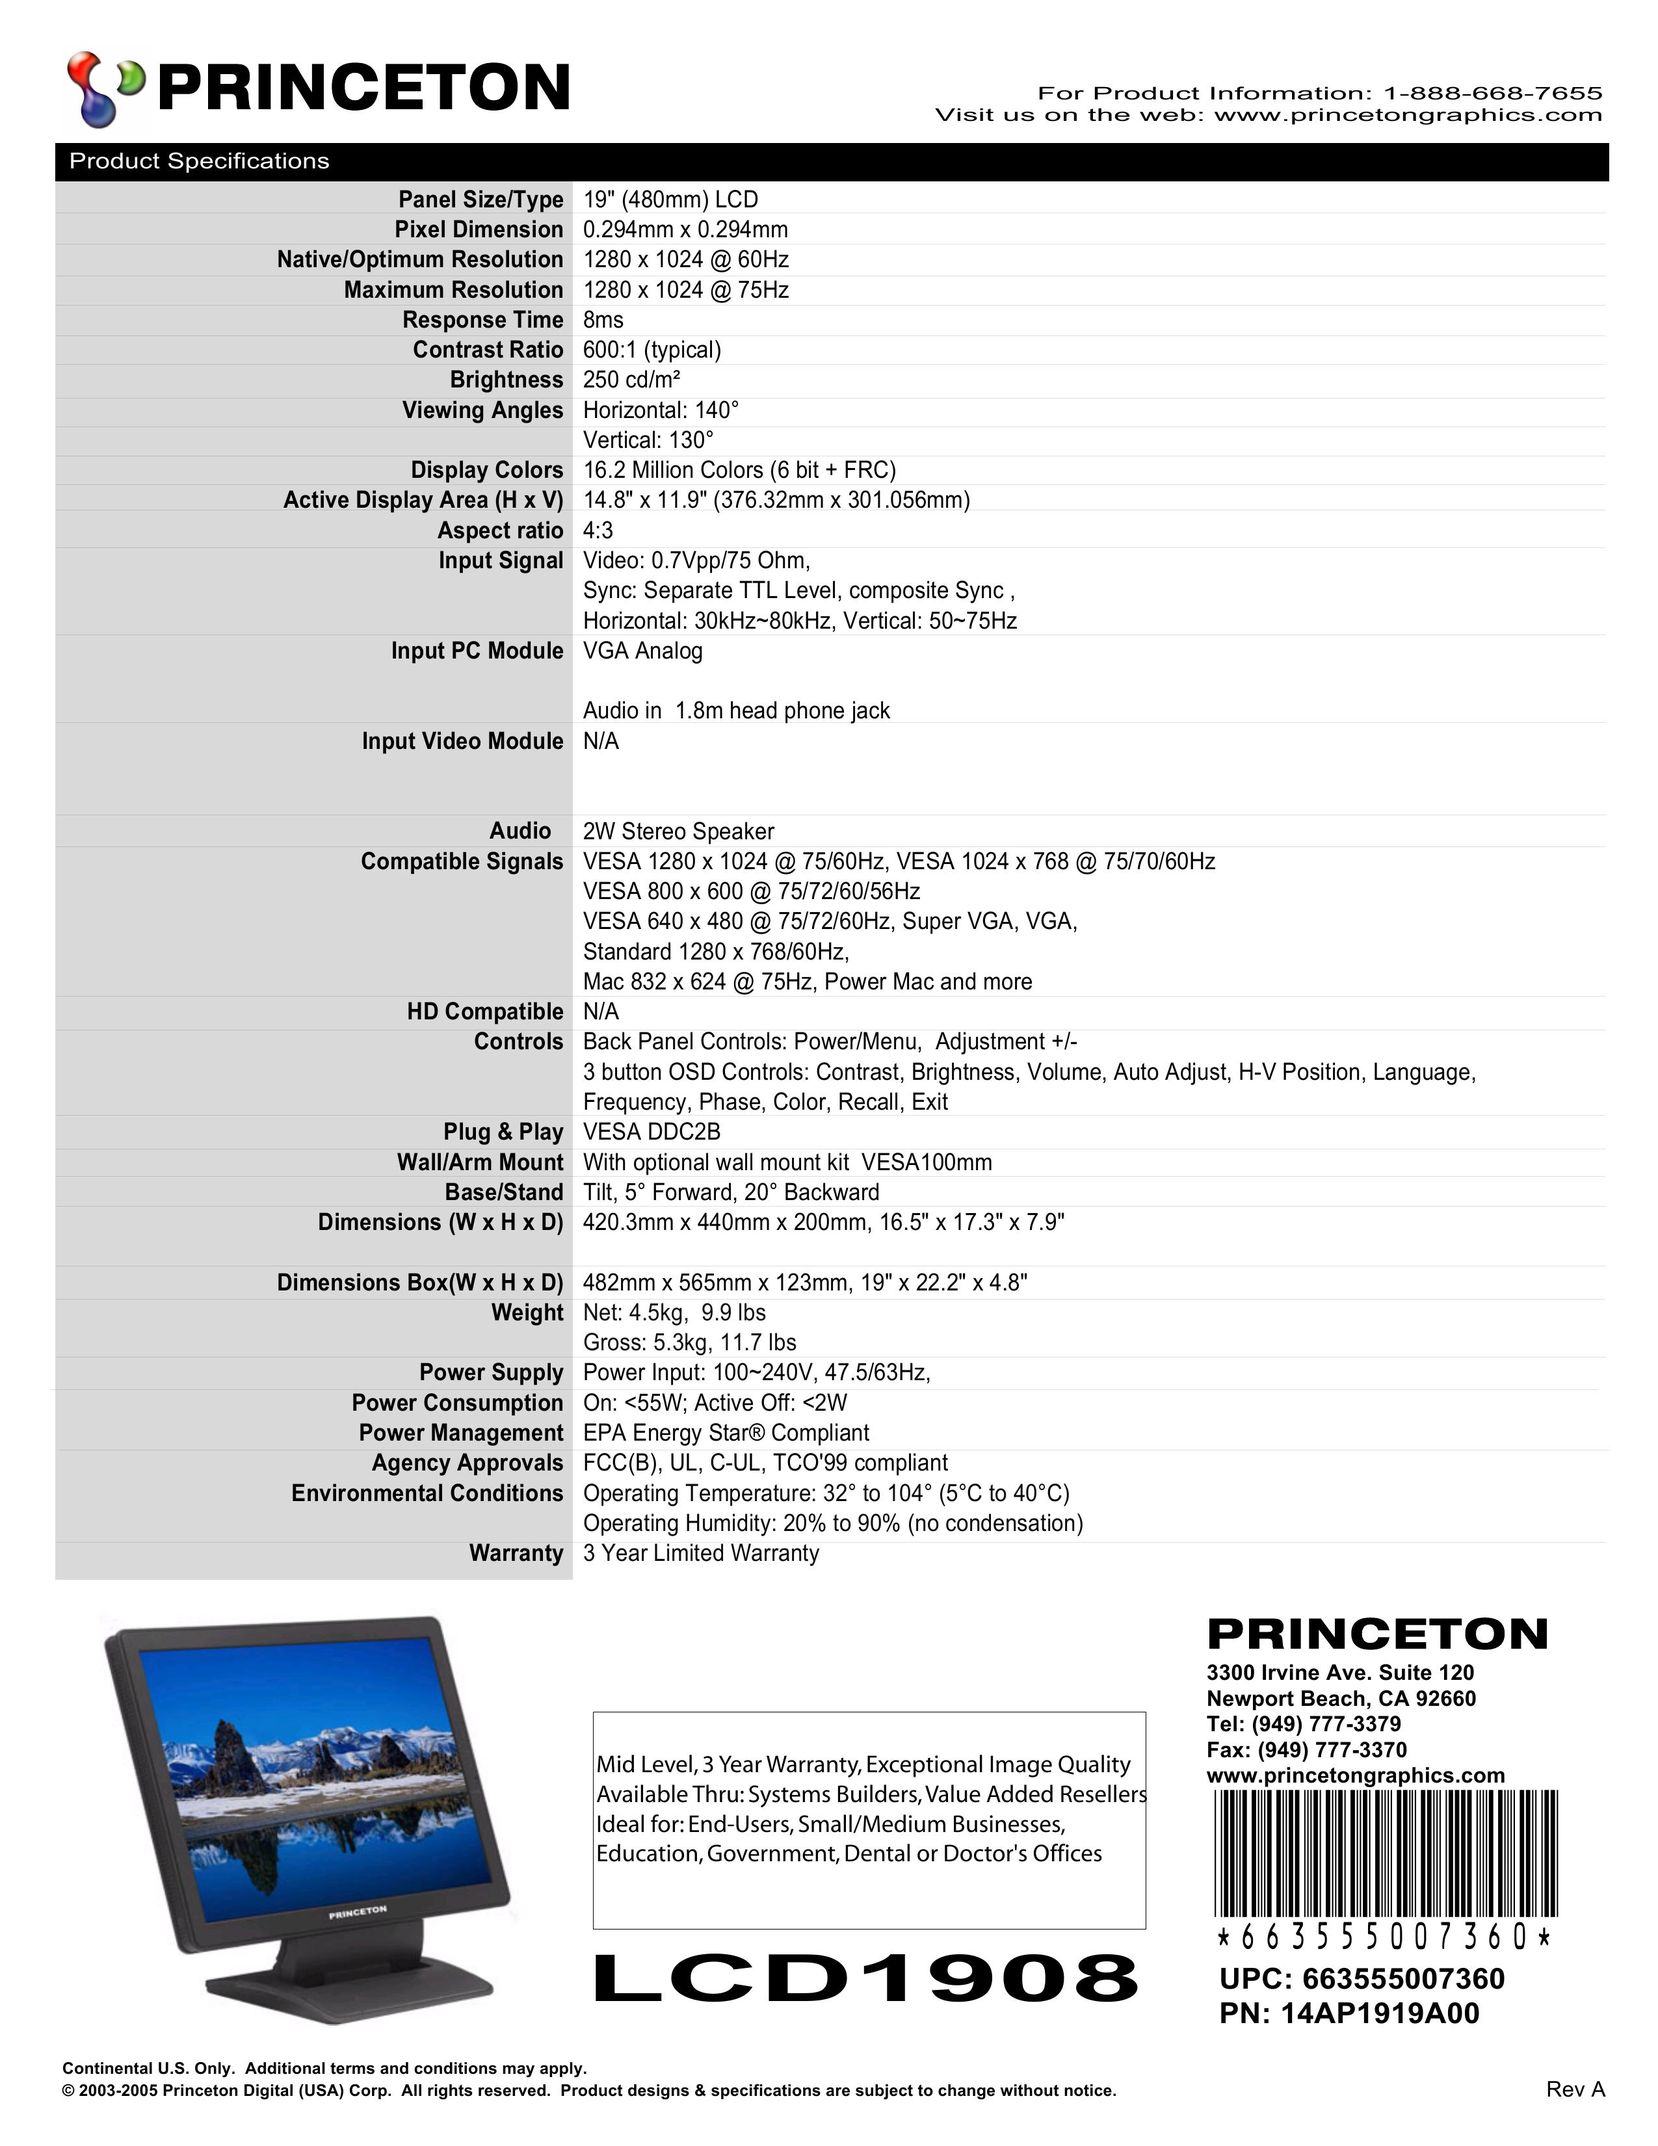 Princeton LCD1908 Computer Monitor User Manual